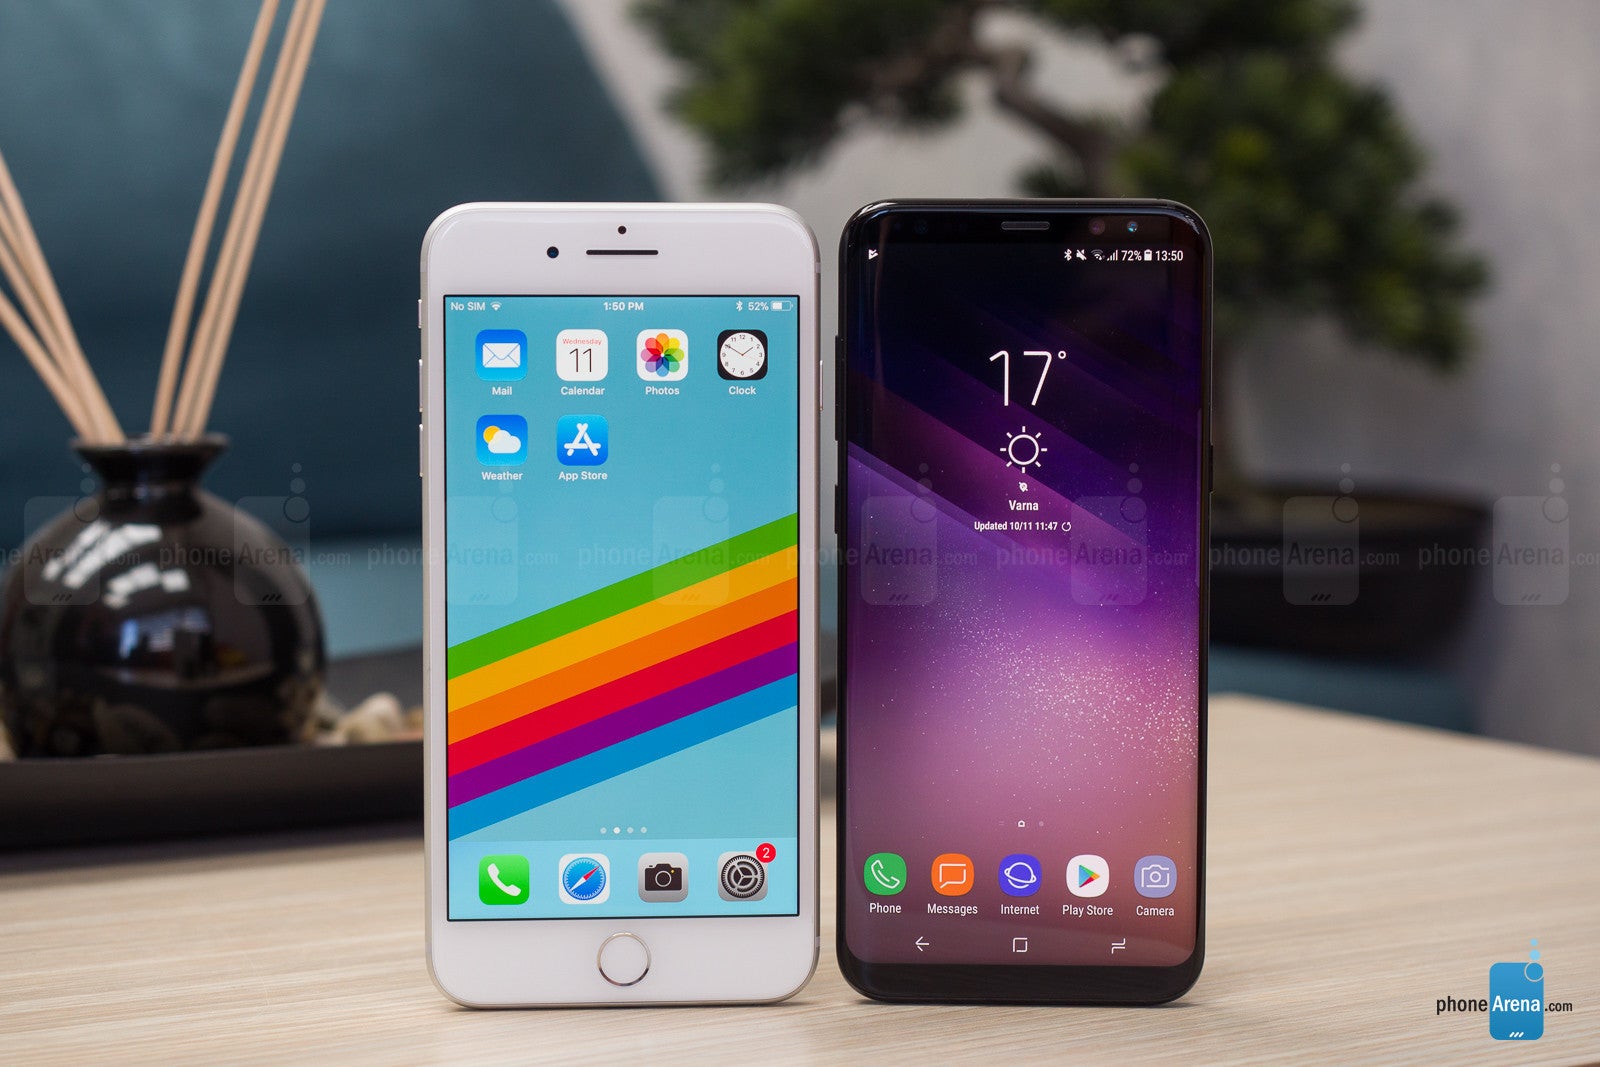 Iphone Samsung s8 Plus. Samsung Galaxy s8 iphone. Iphone 8s Plus. Samsung 8 iphone 8.